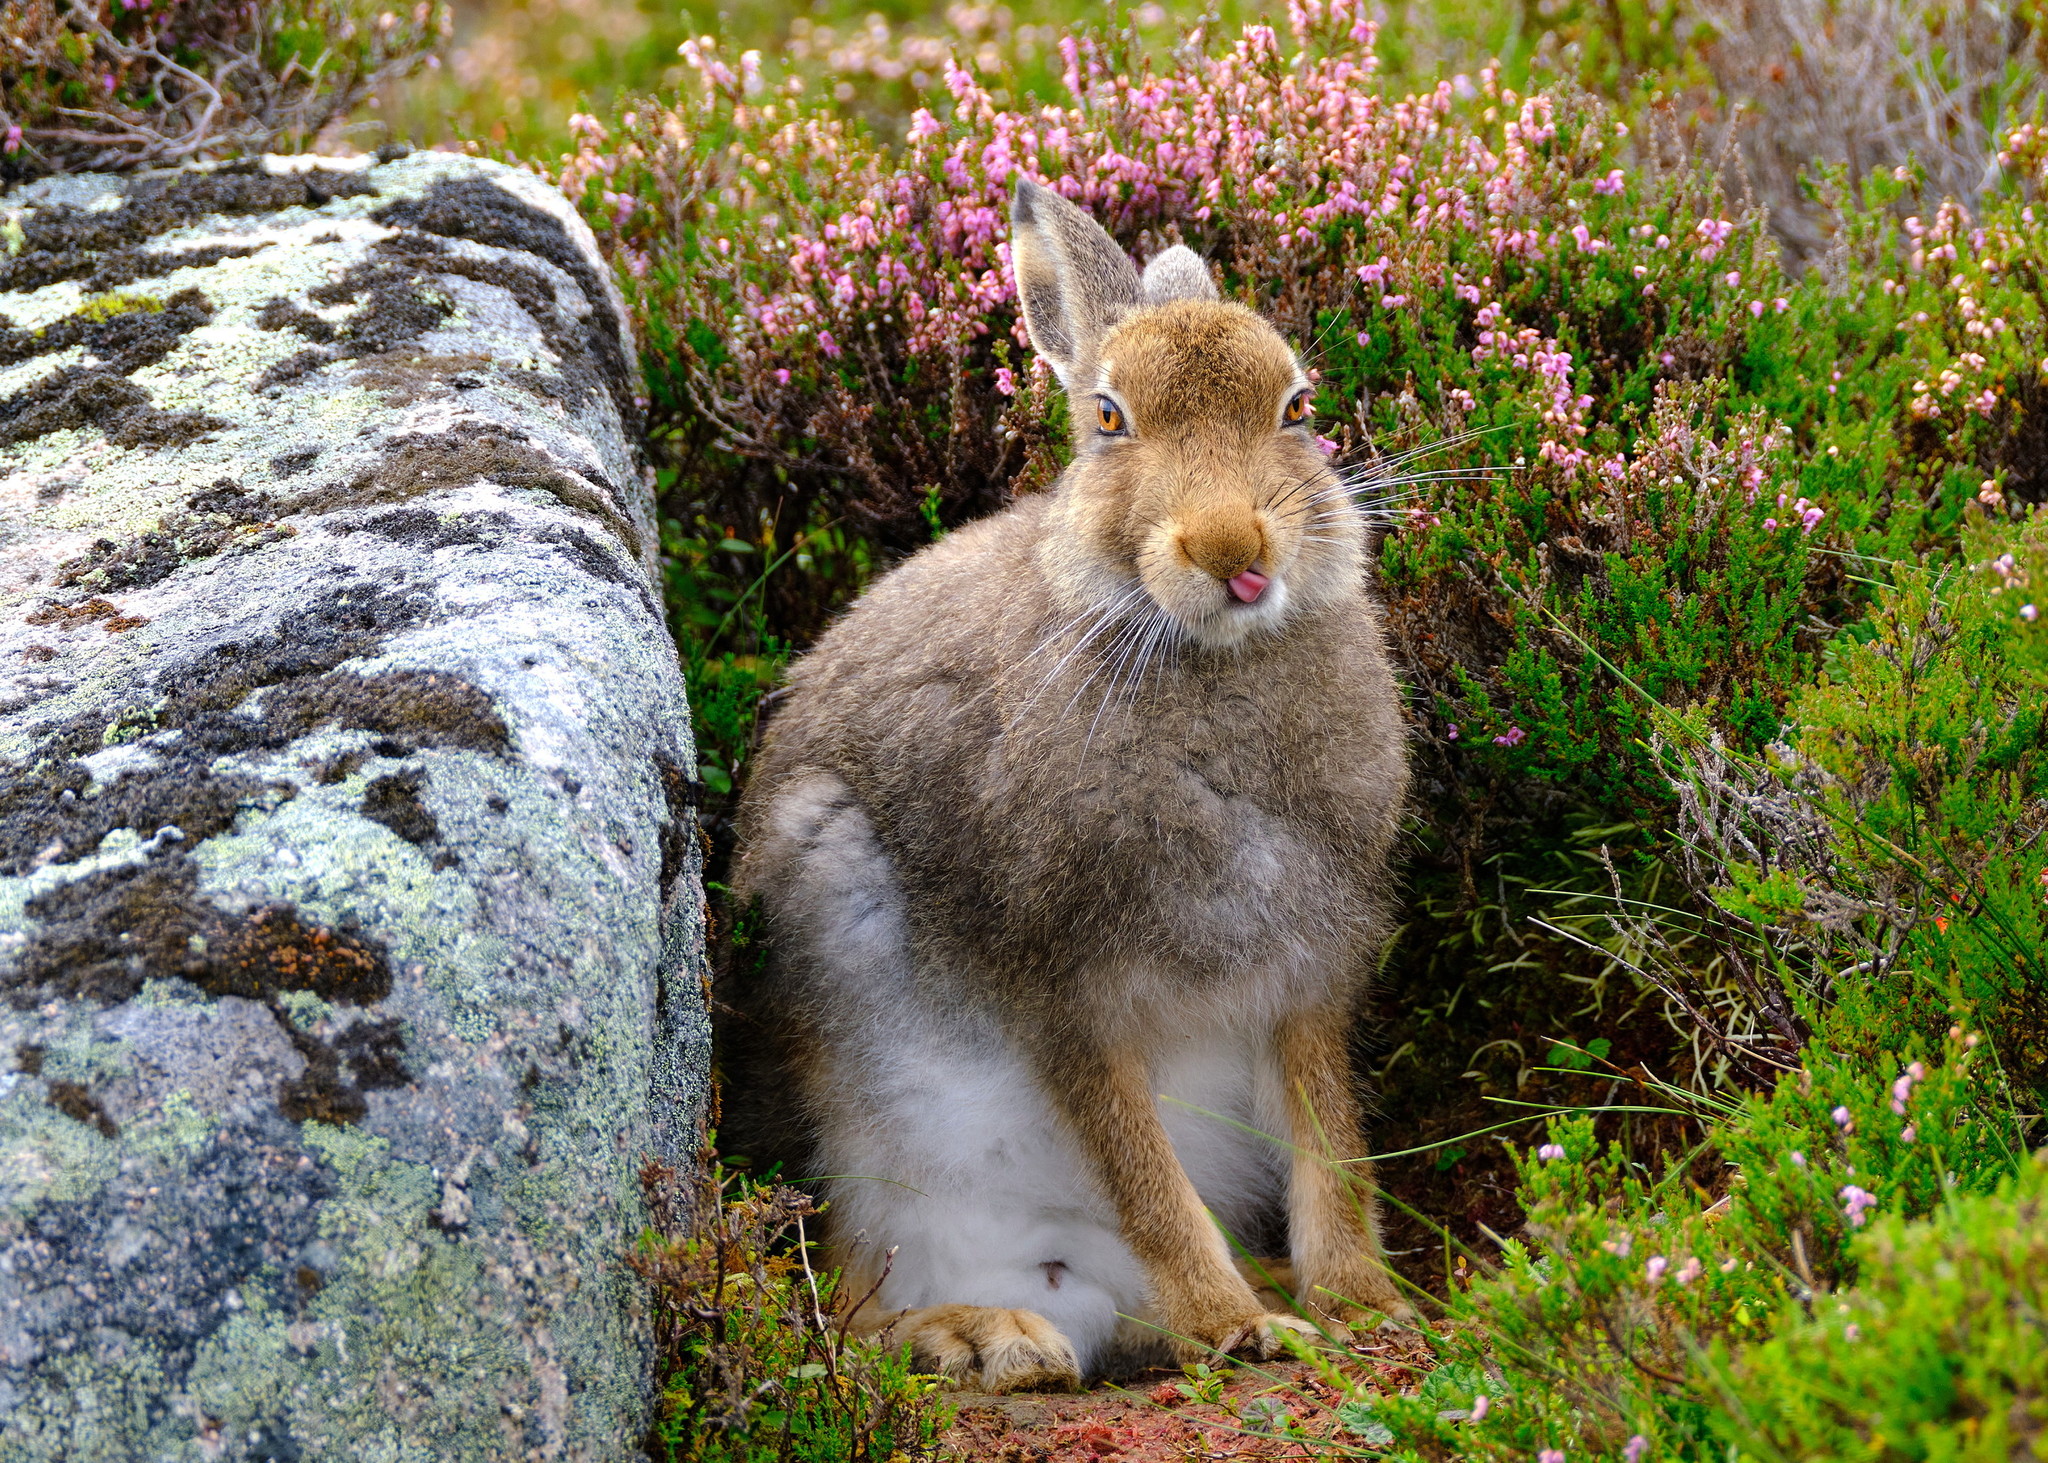 Take away the camera! - Hare, Wild animals, National park, Scotland, Longpost